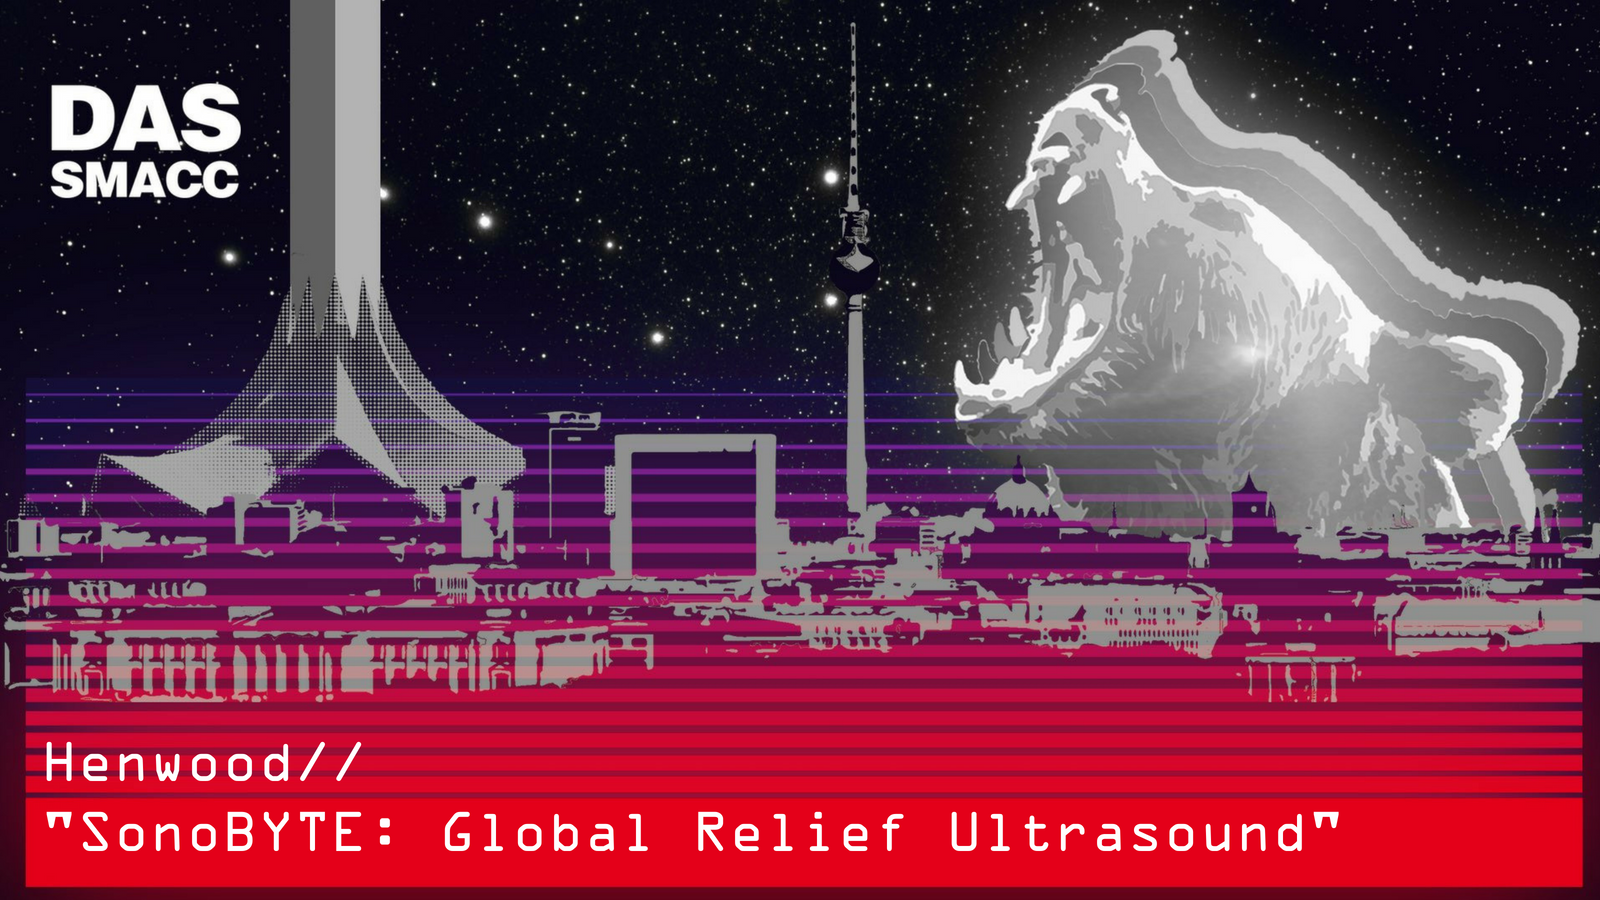 SonoBYTE: Global Relief Ultrasound